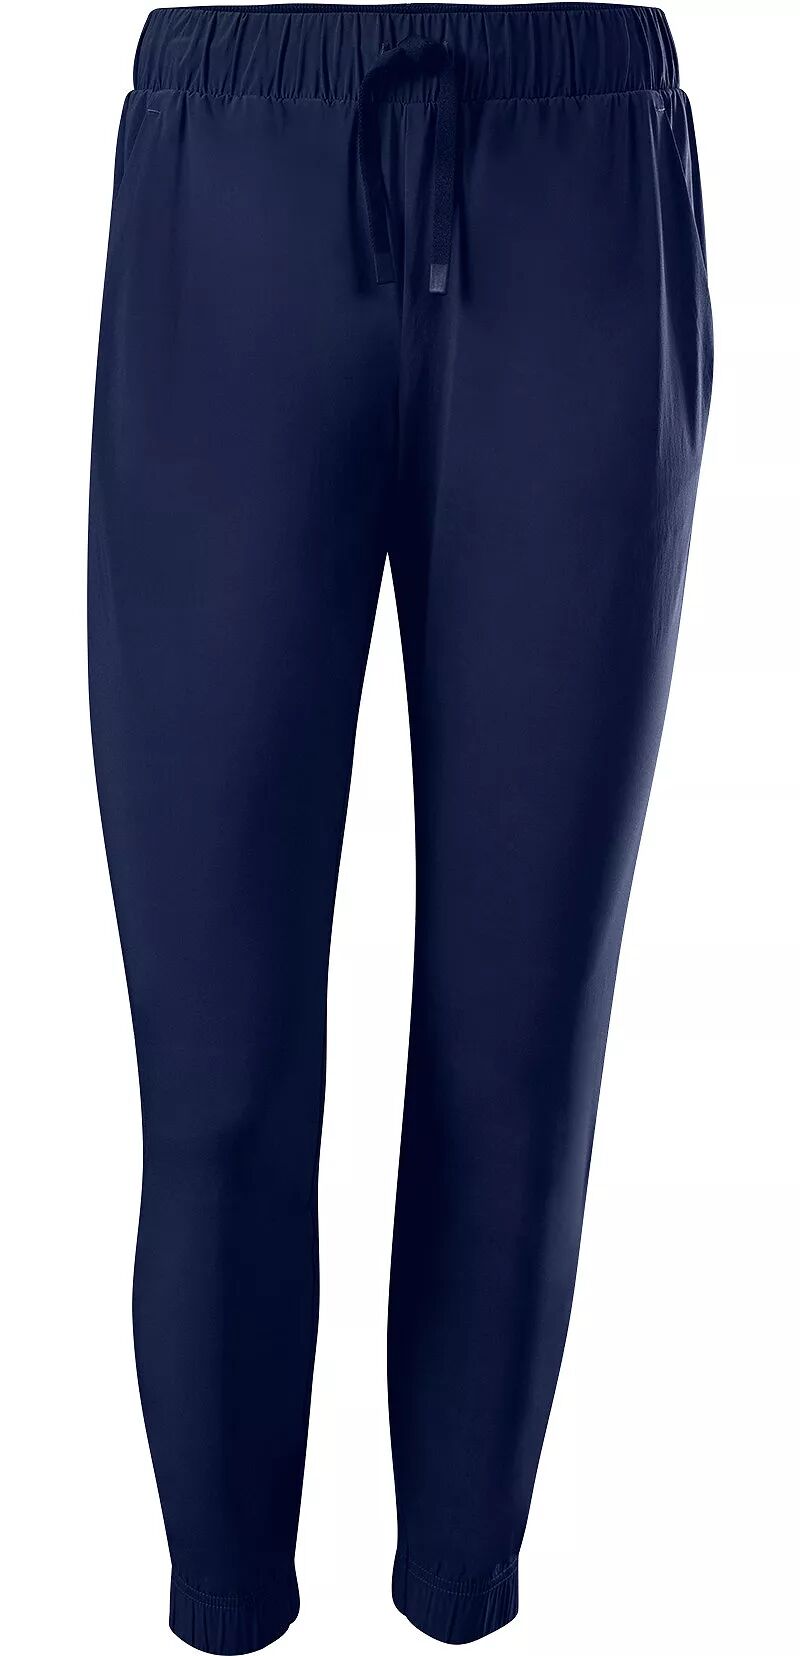 Женские брюки-джоггеры из тканого материала EvoShield женские прямые брюки из тканого материала би стрейч jones new york темно синий